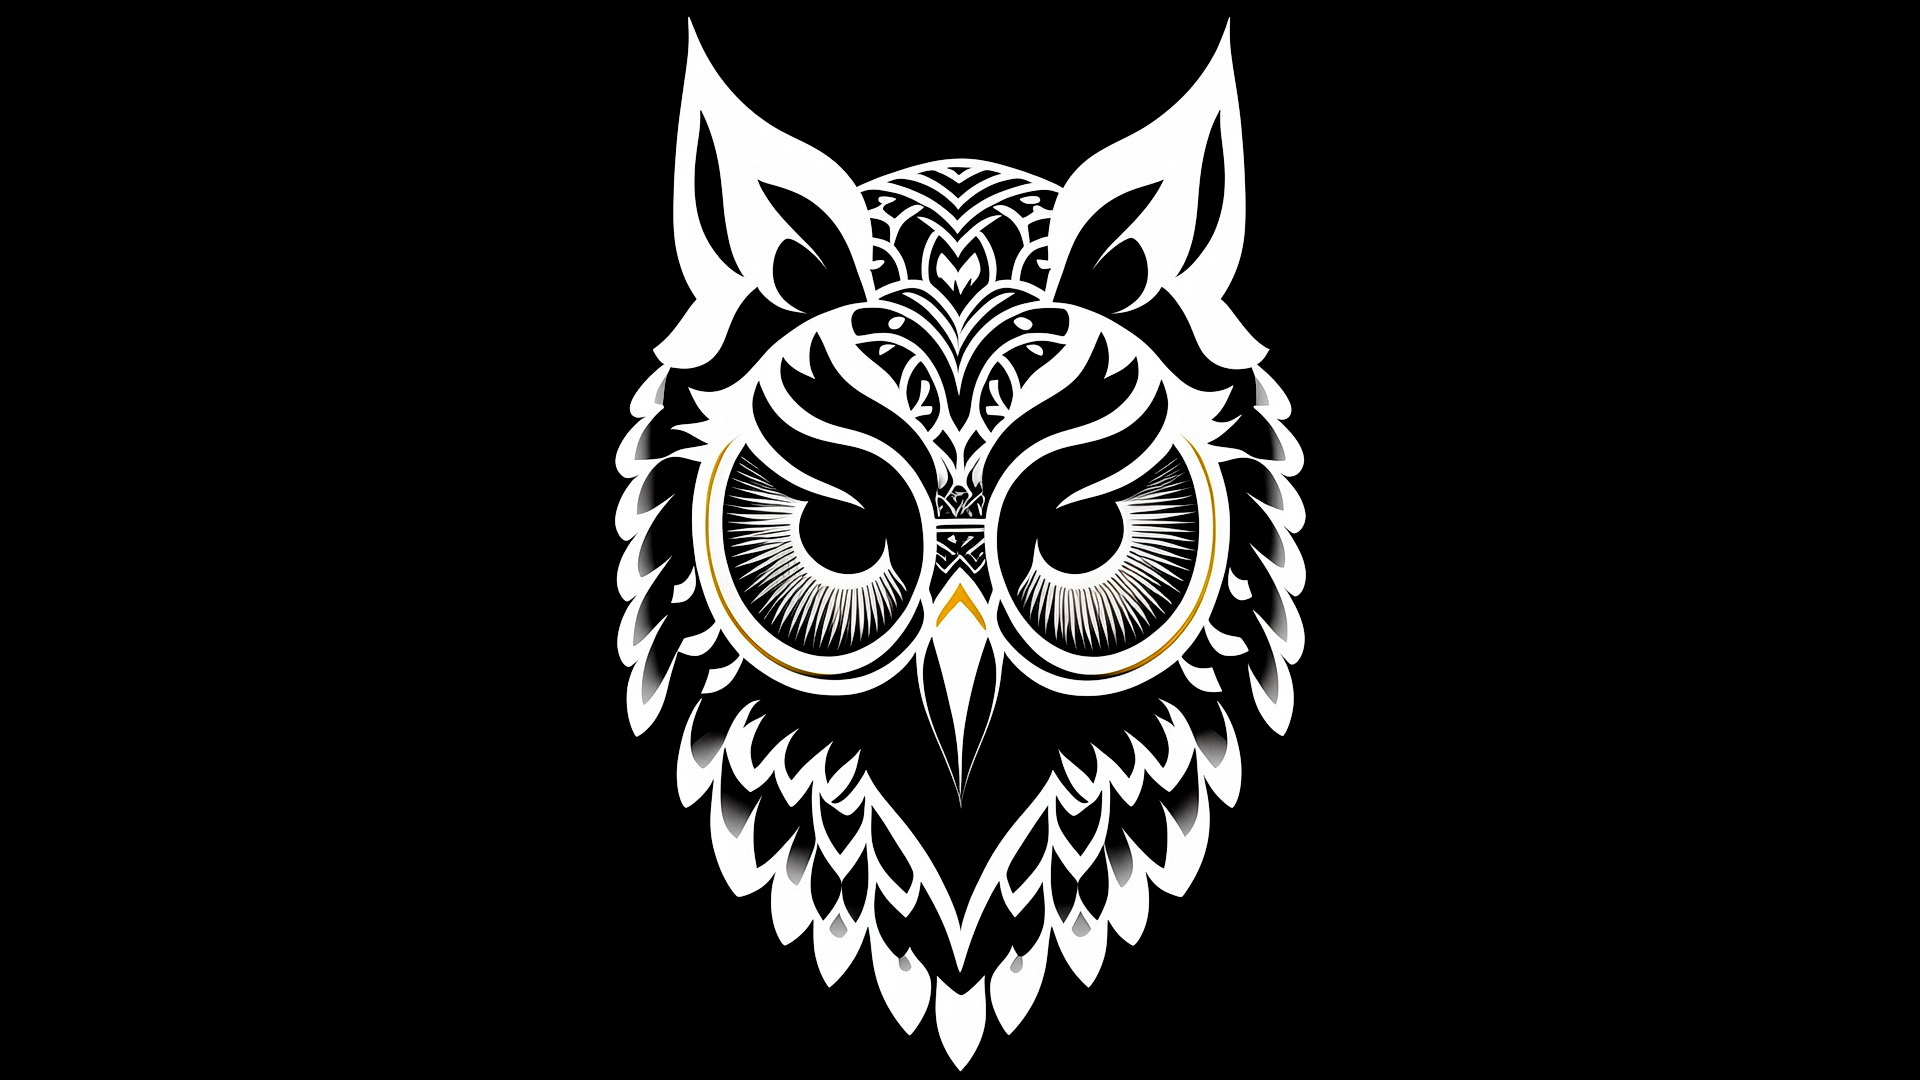 Owl head on black background